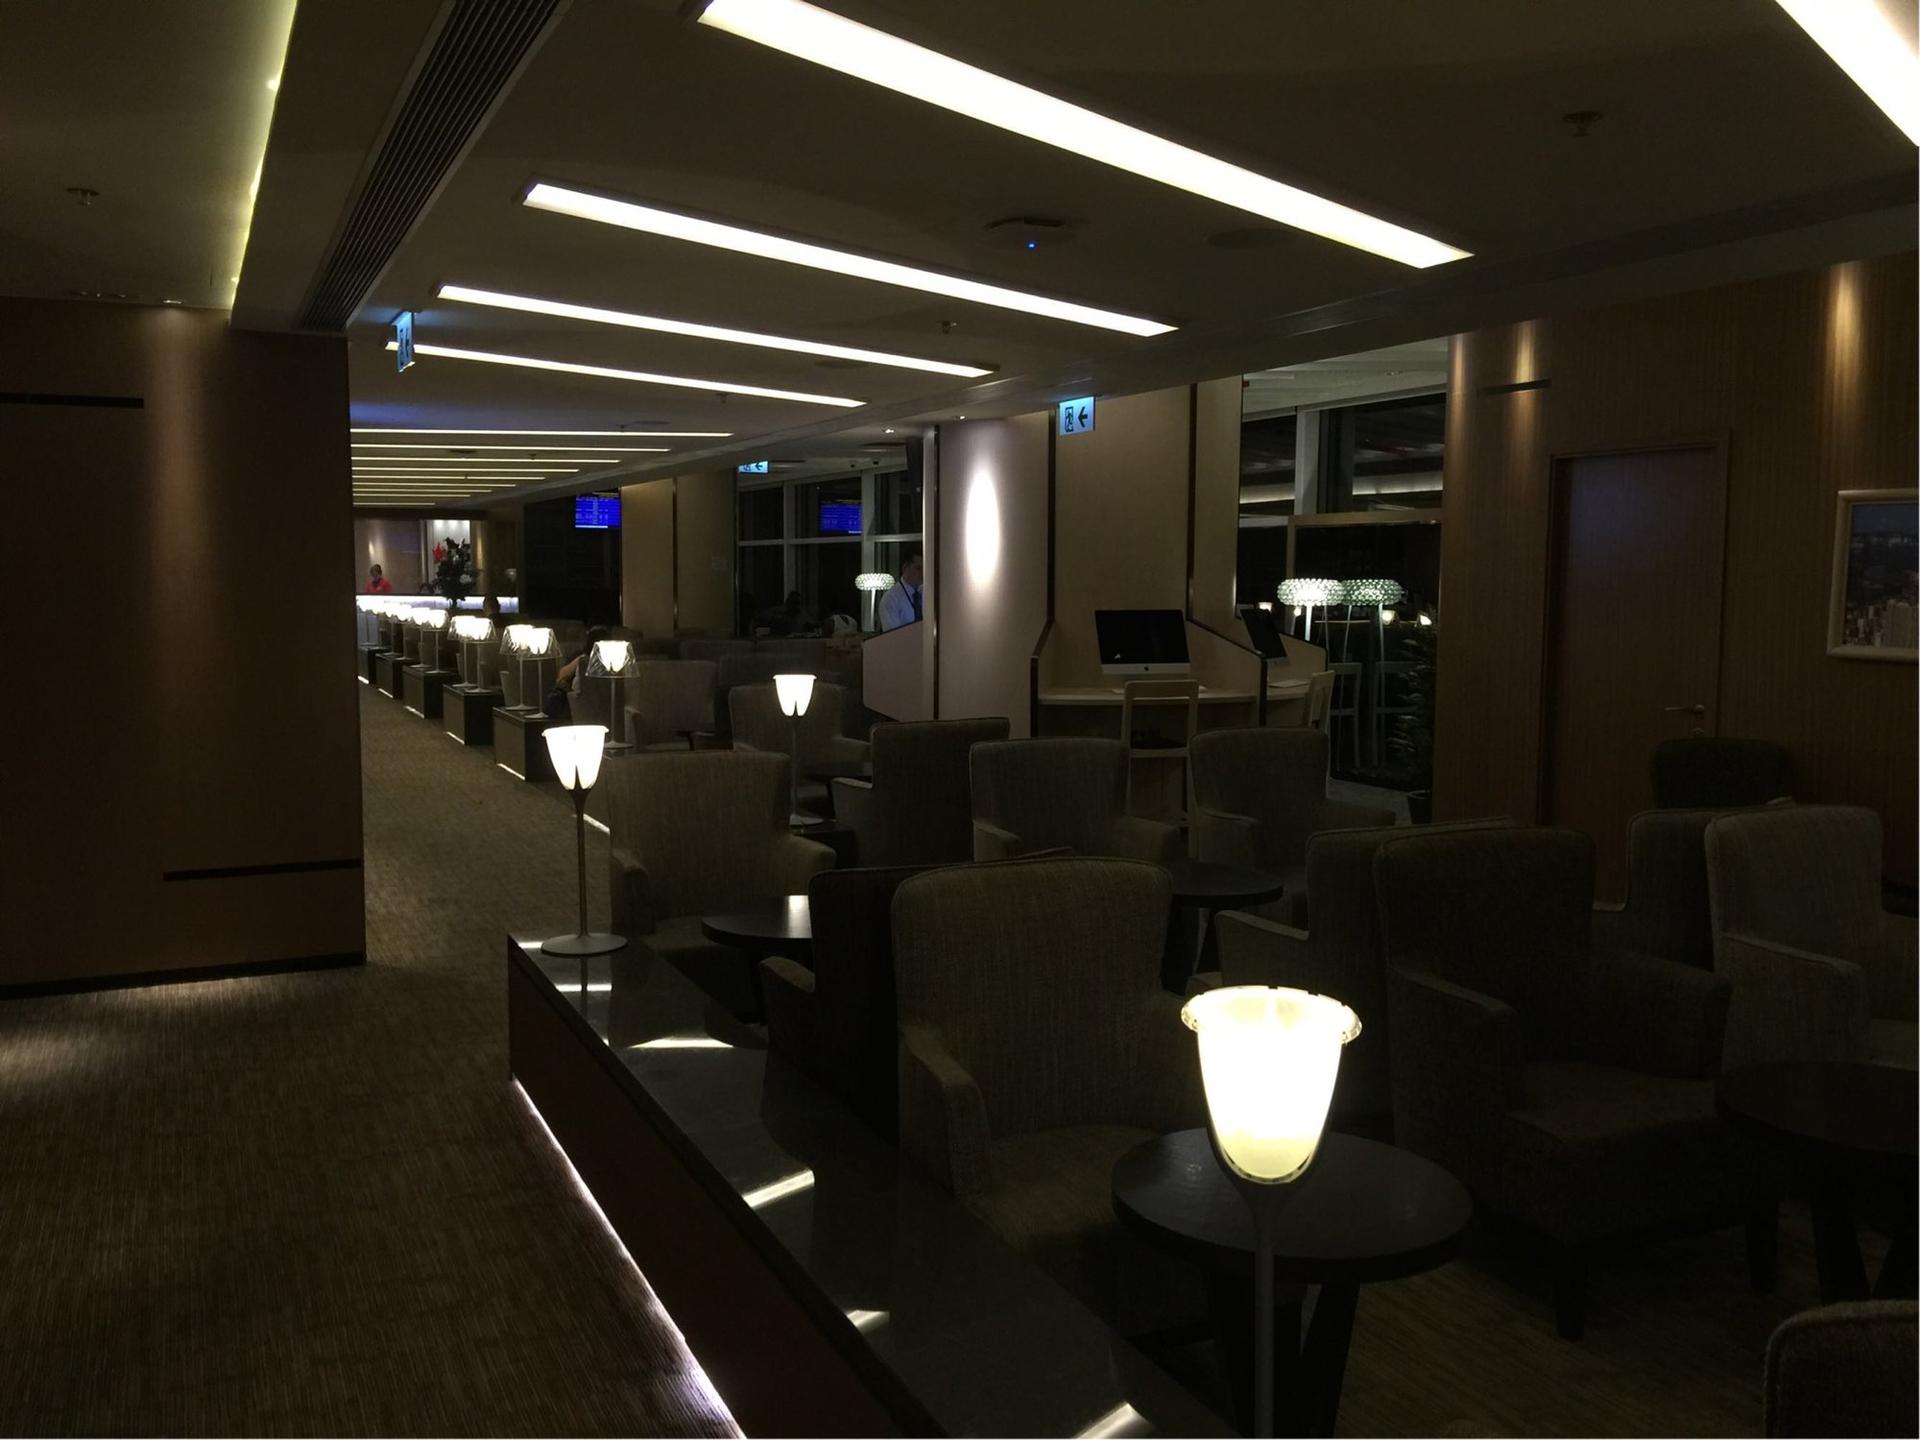 Hong Kong Airlines VIP Lounge (Club Bauhinia) image 3 of 40